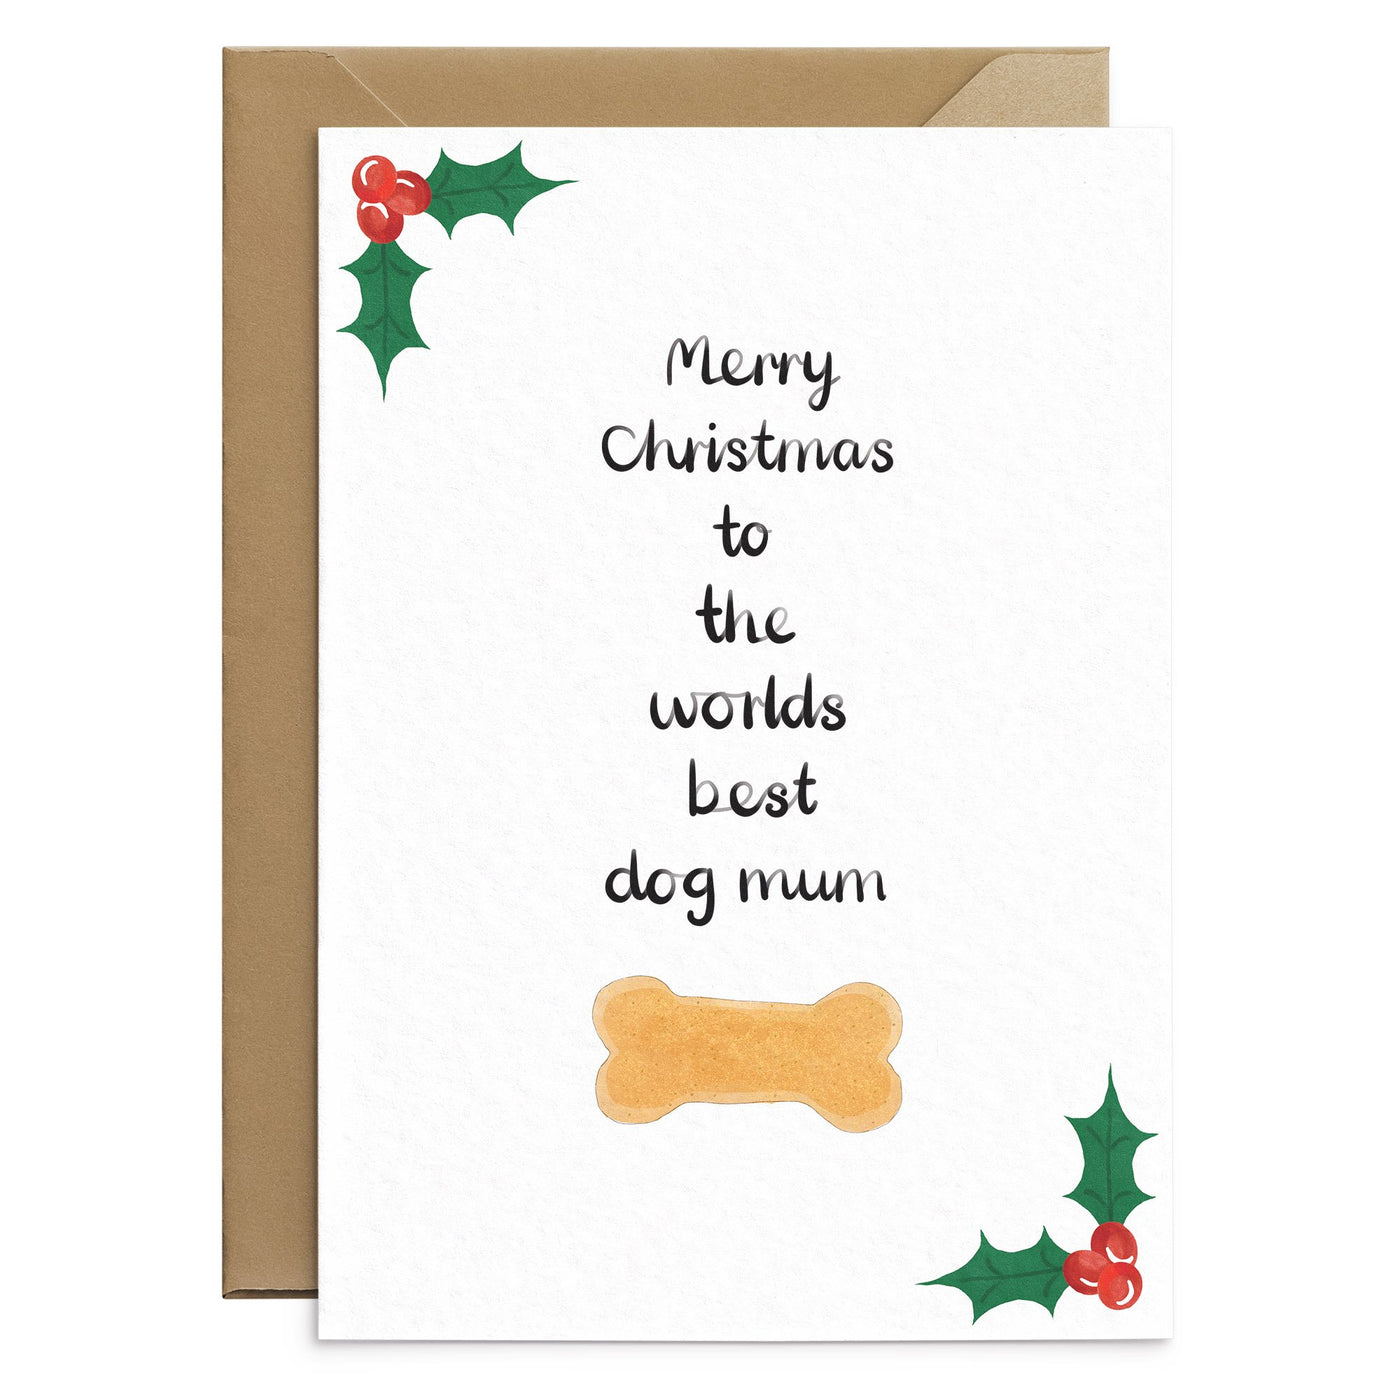 Best Dog Mum Christmas Card - Poppins & Co.